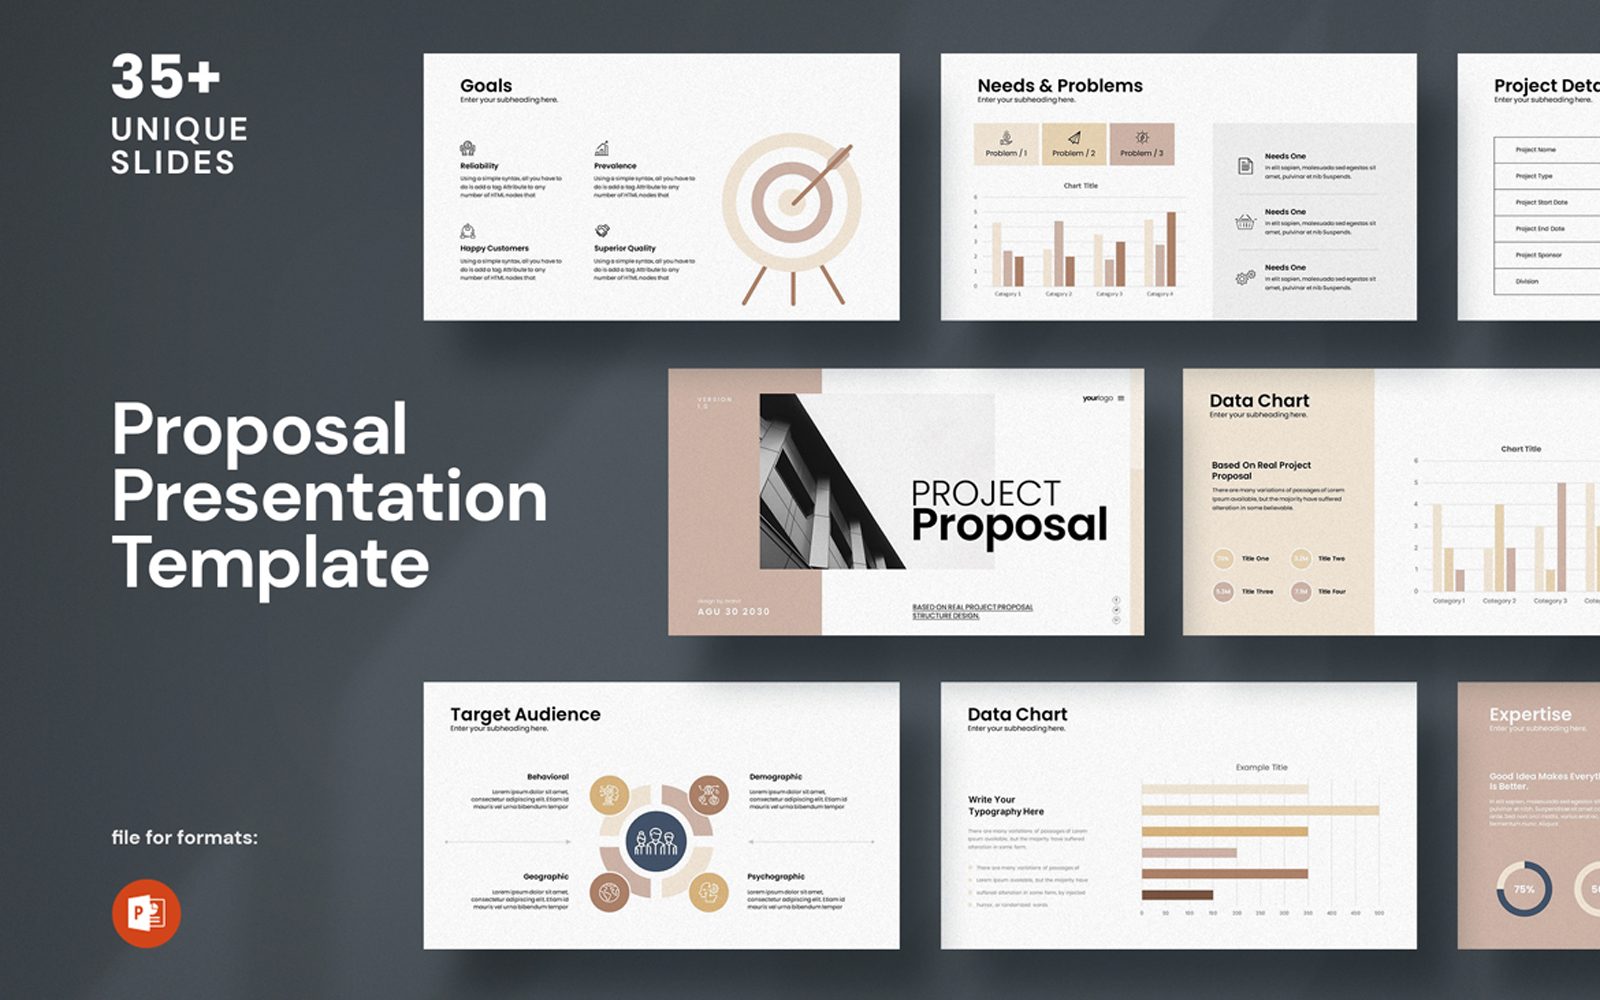 Project Proposal PowerPont Presentation Template